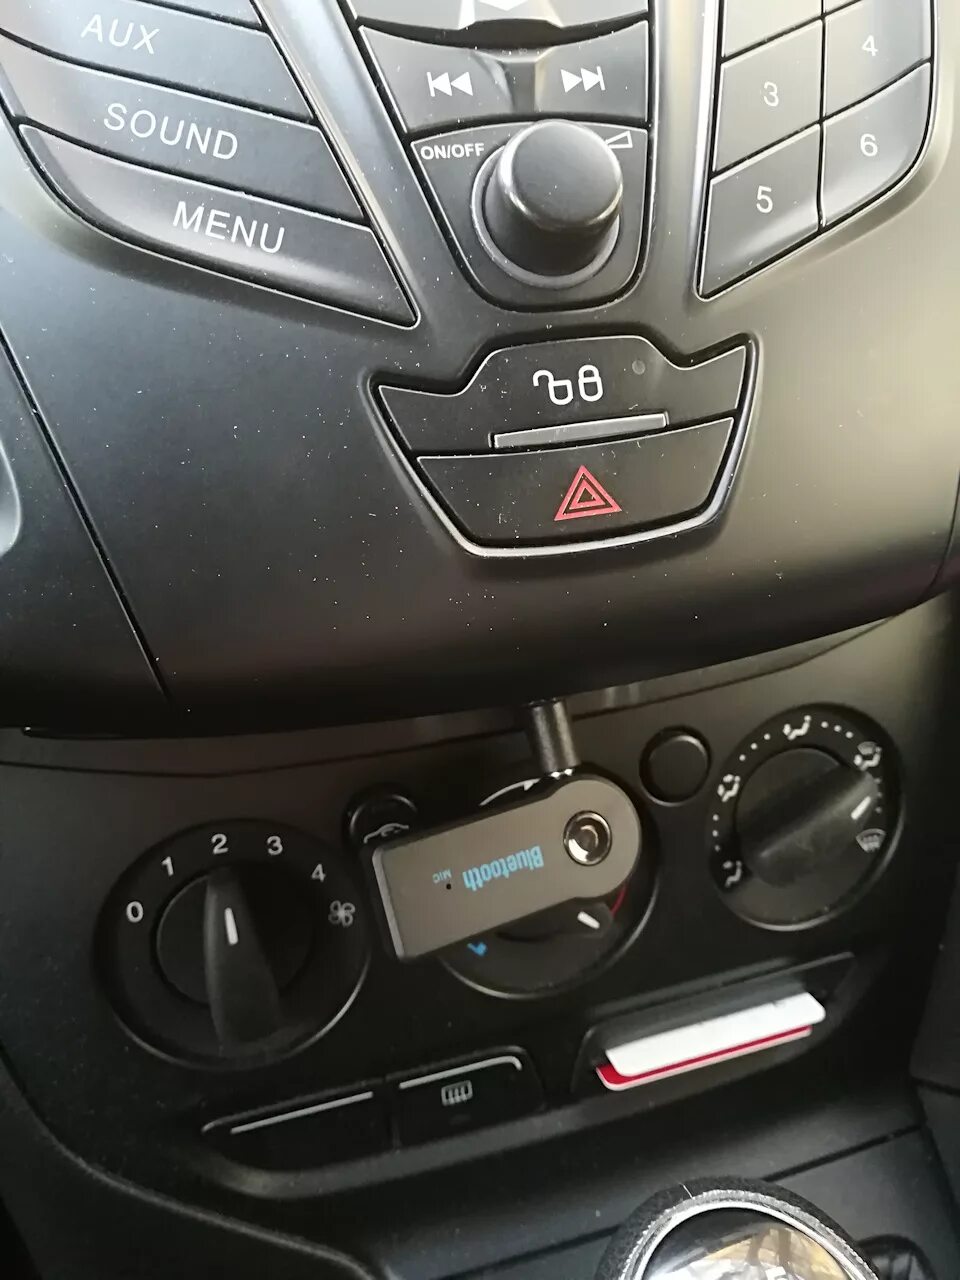 Блютуз фокус на. Блютуз в Форд фокус 3. Ford Focus 3 магнитола блютуз. Ford Focus 3 Bluetooth адаптер. Блютуз в Форд фокус 3 2013 года.